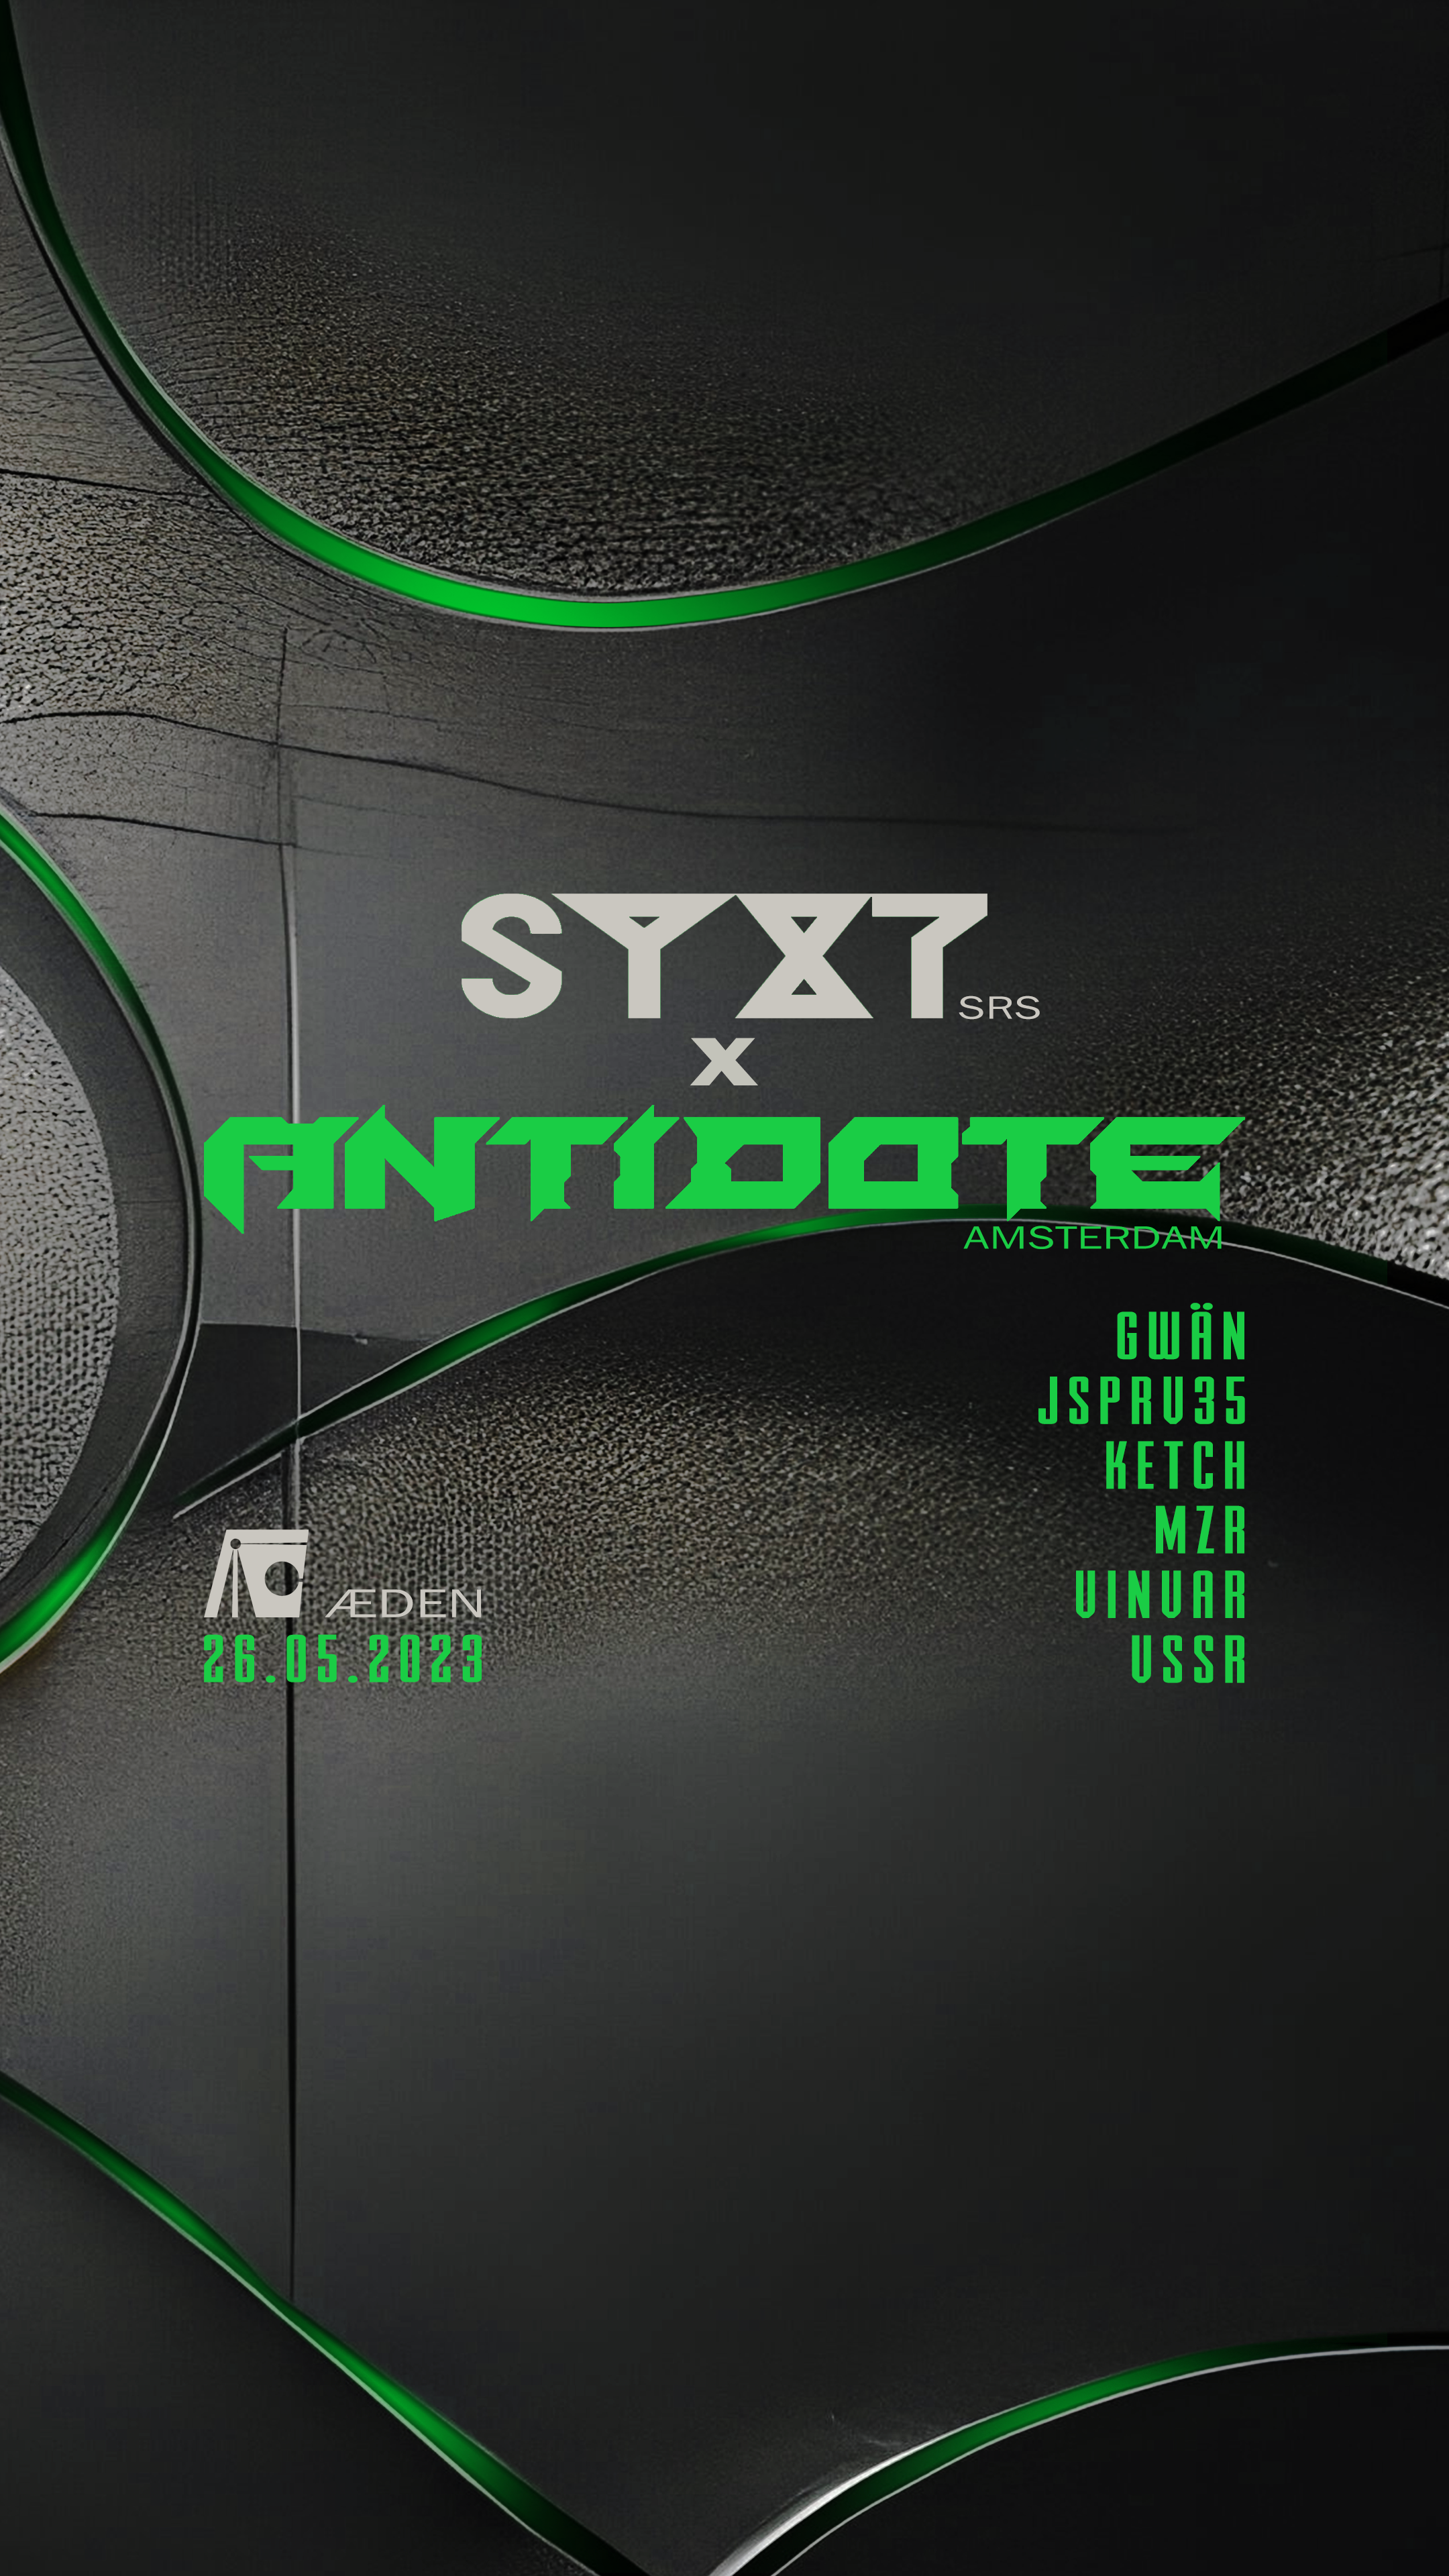 SYXTSRS X ANTIDOTE - Página frontal